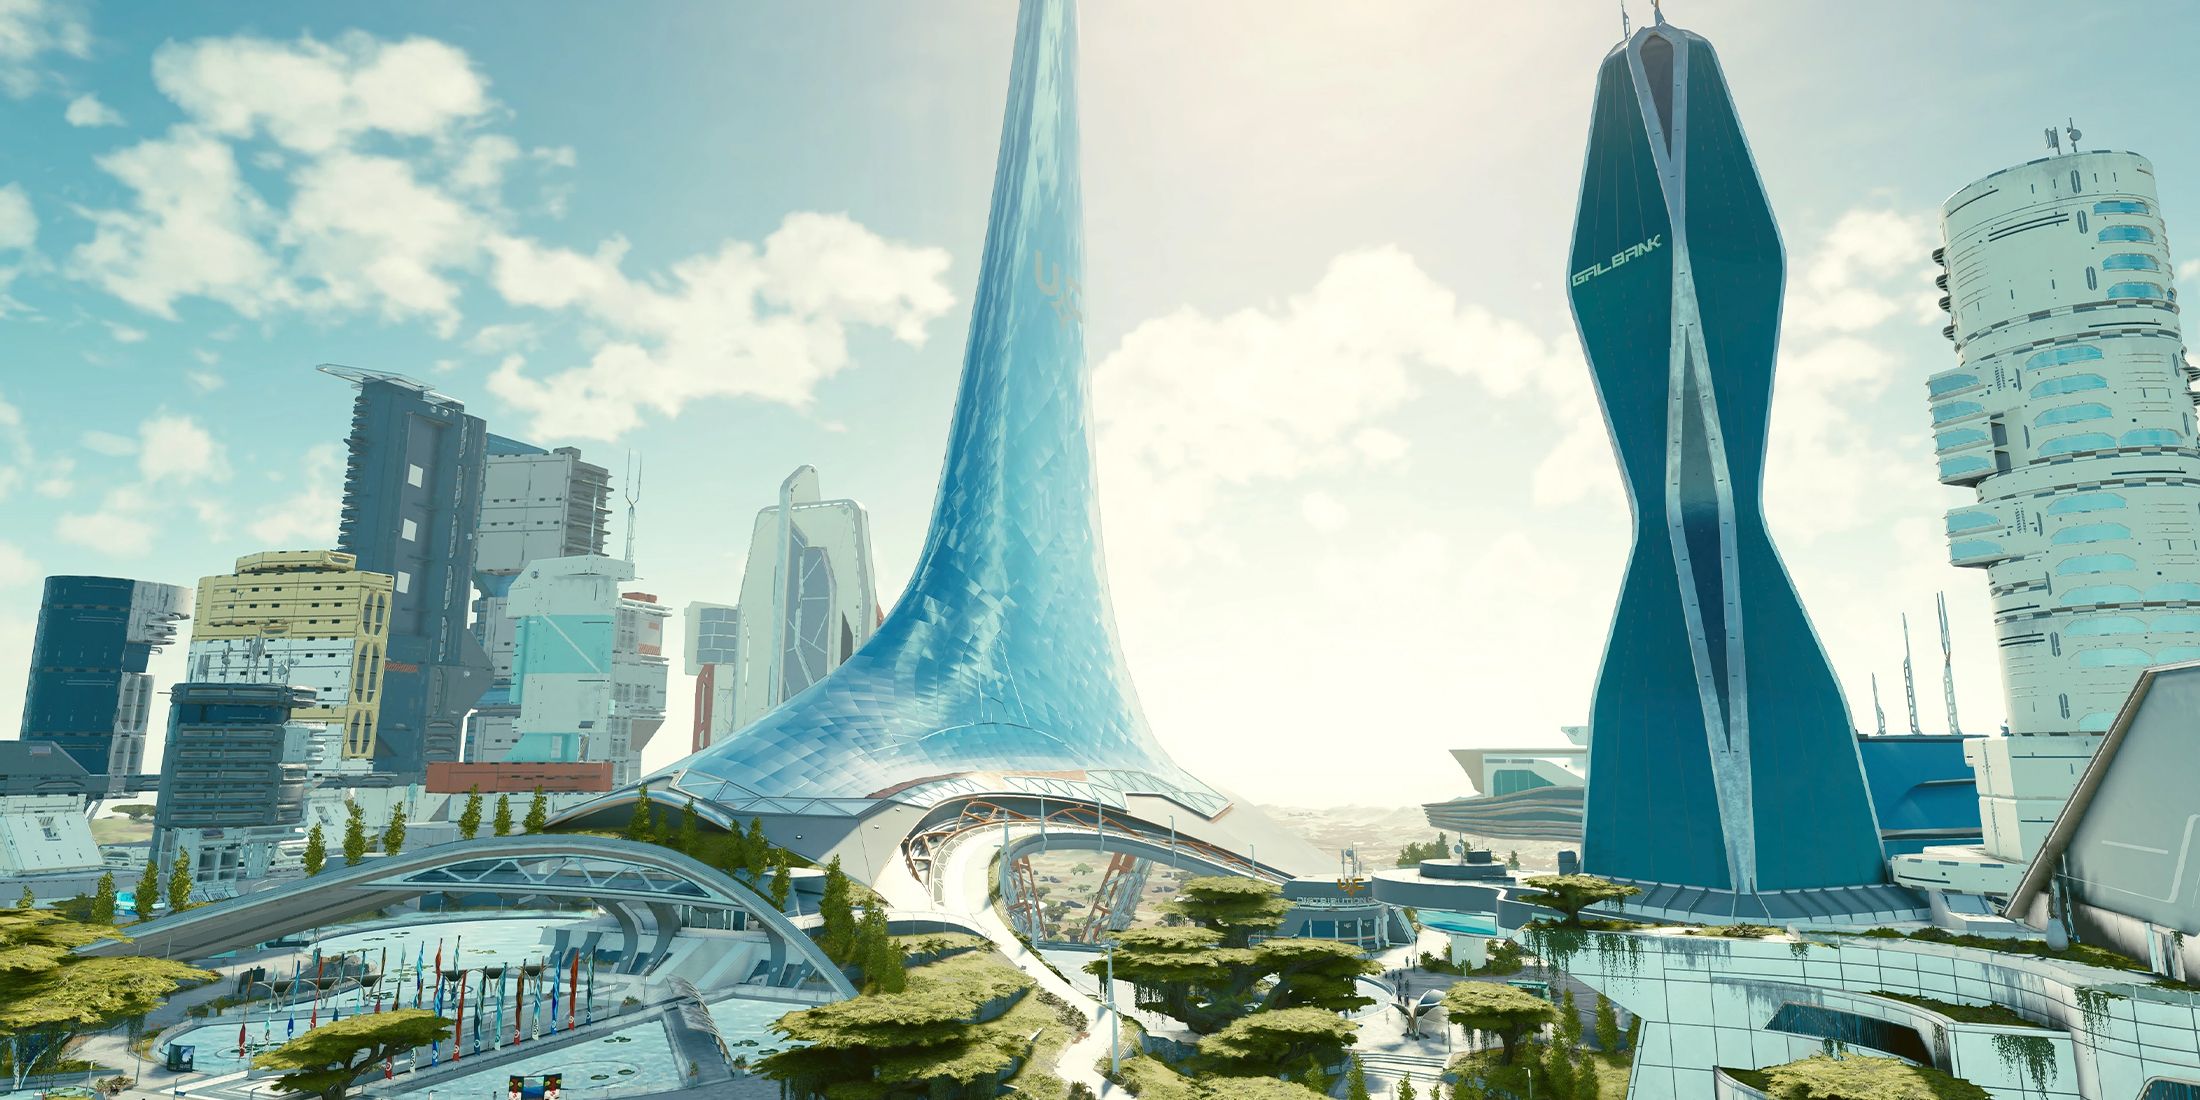 Full view of New Atlantis in Starfield